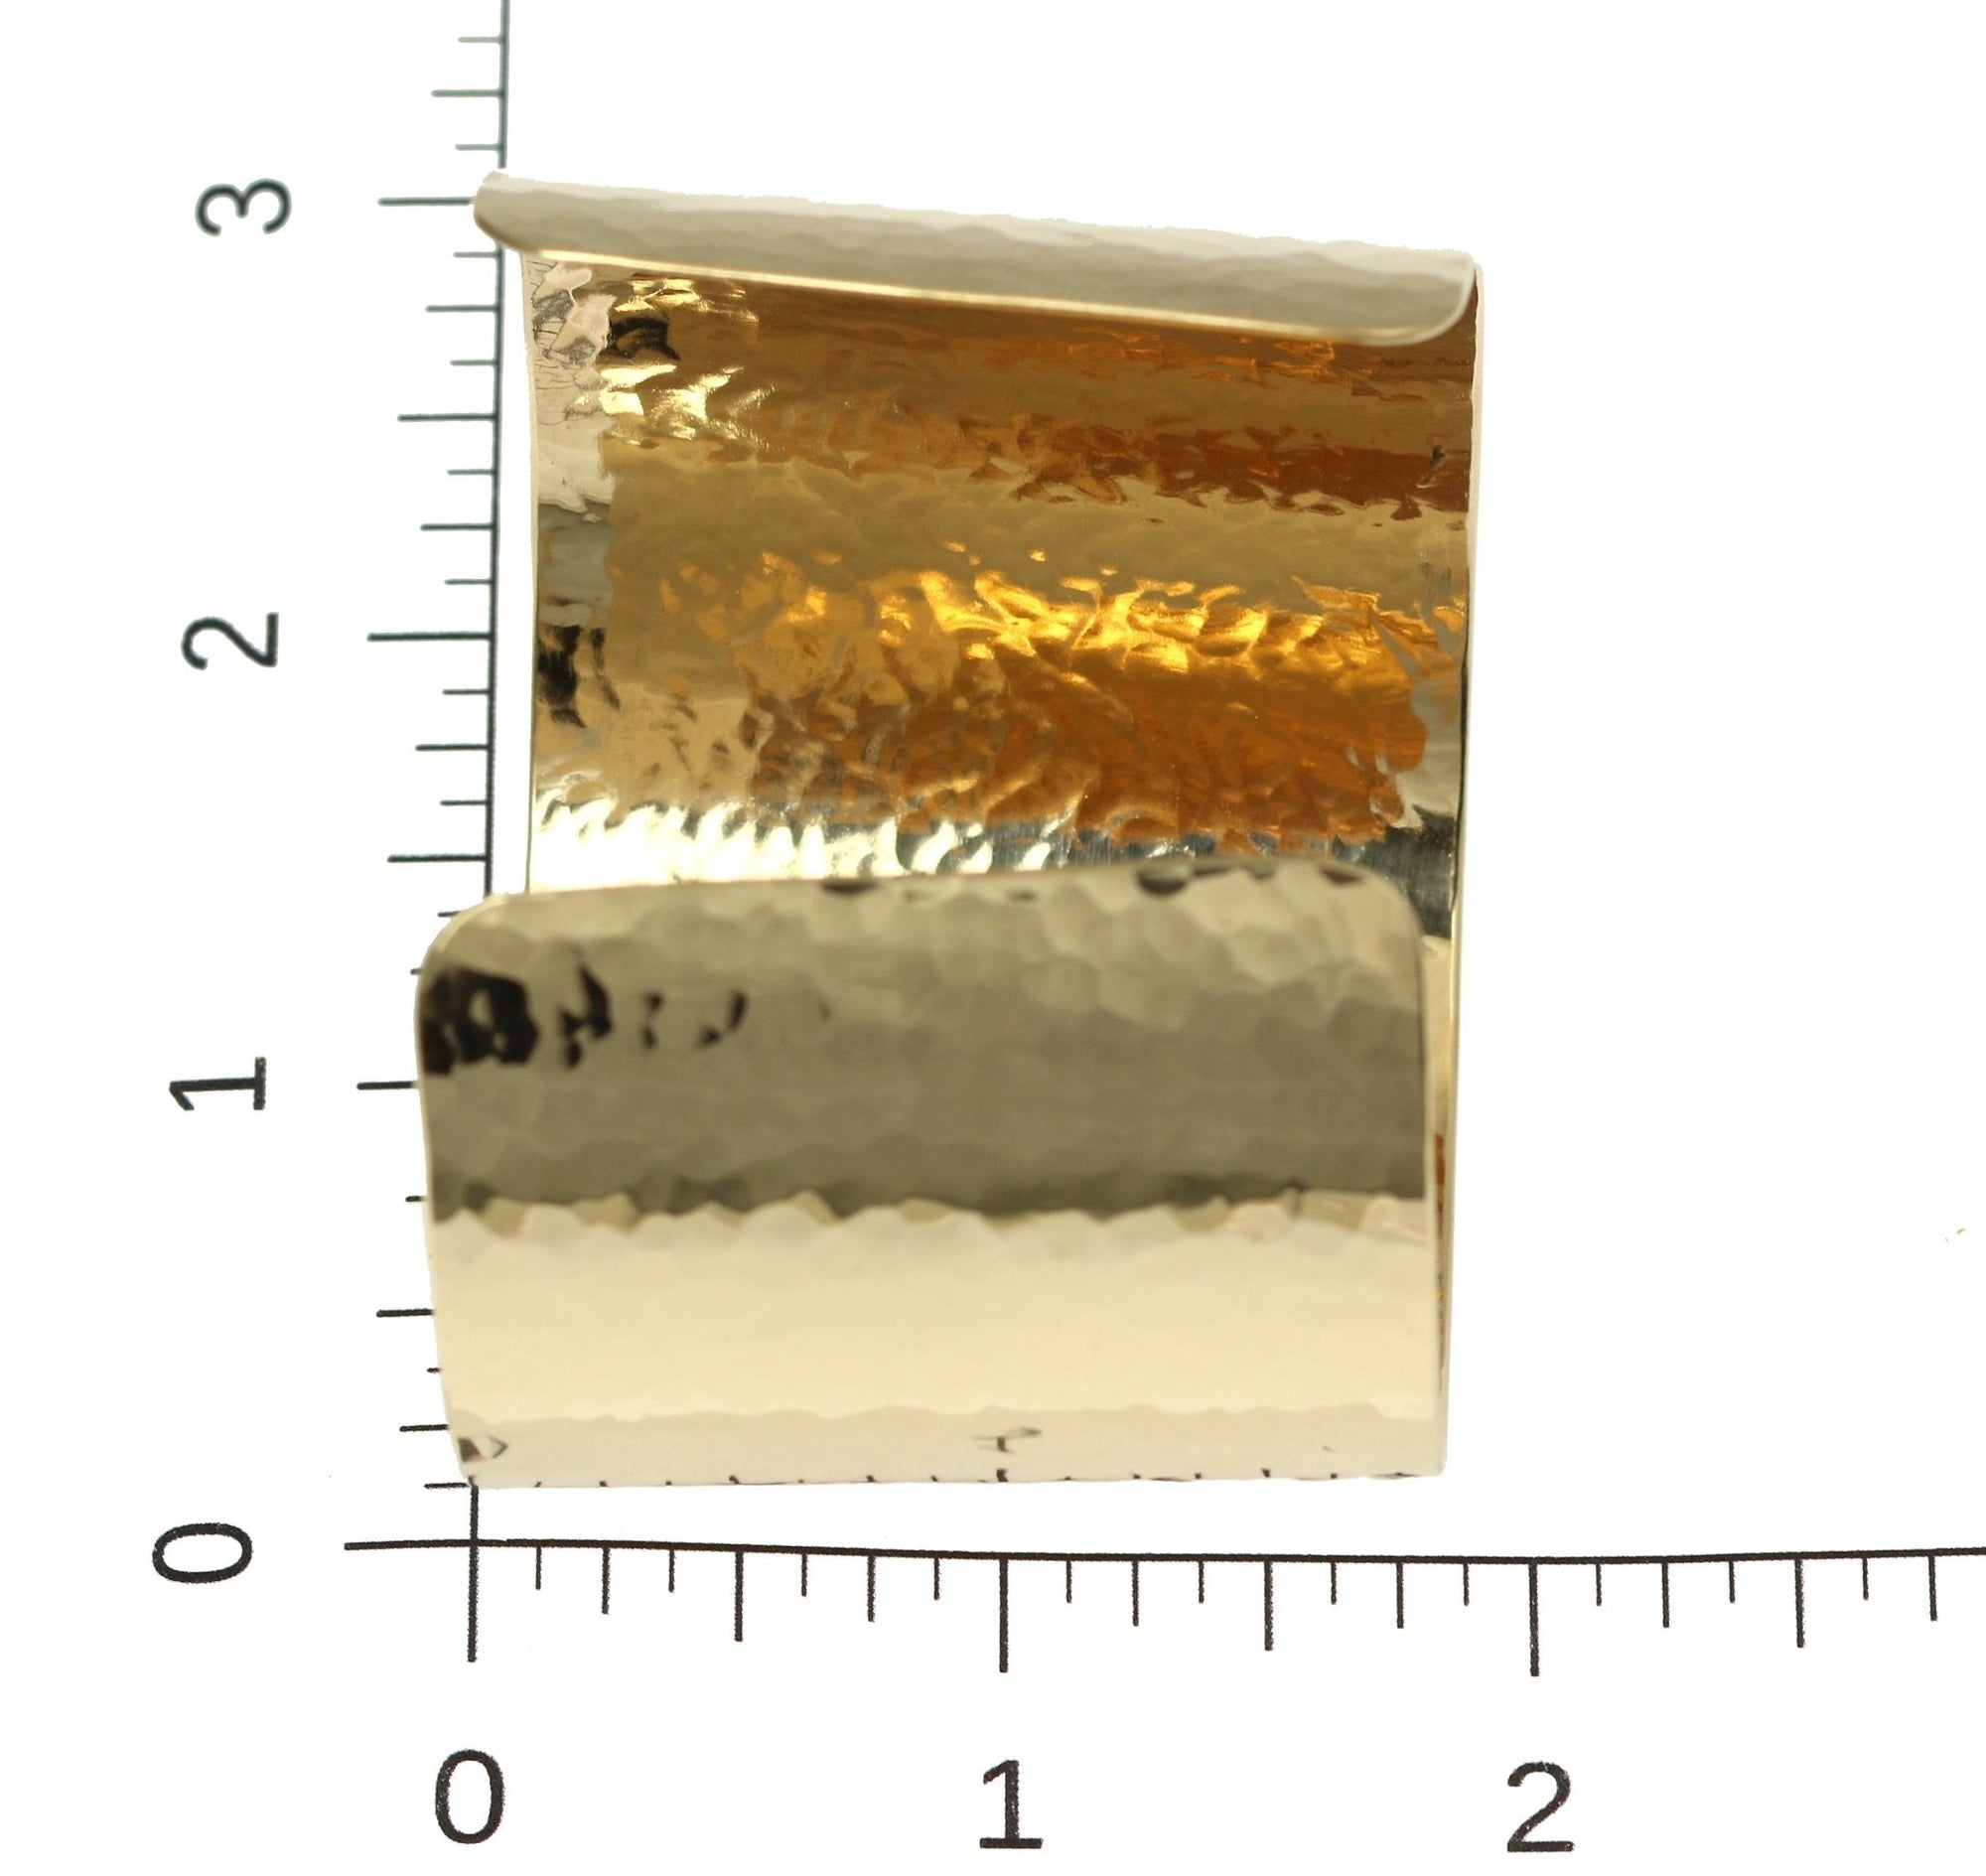 Hammered 14K Gold-filled Cuff Bracelet On Measurement Scale